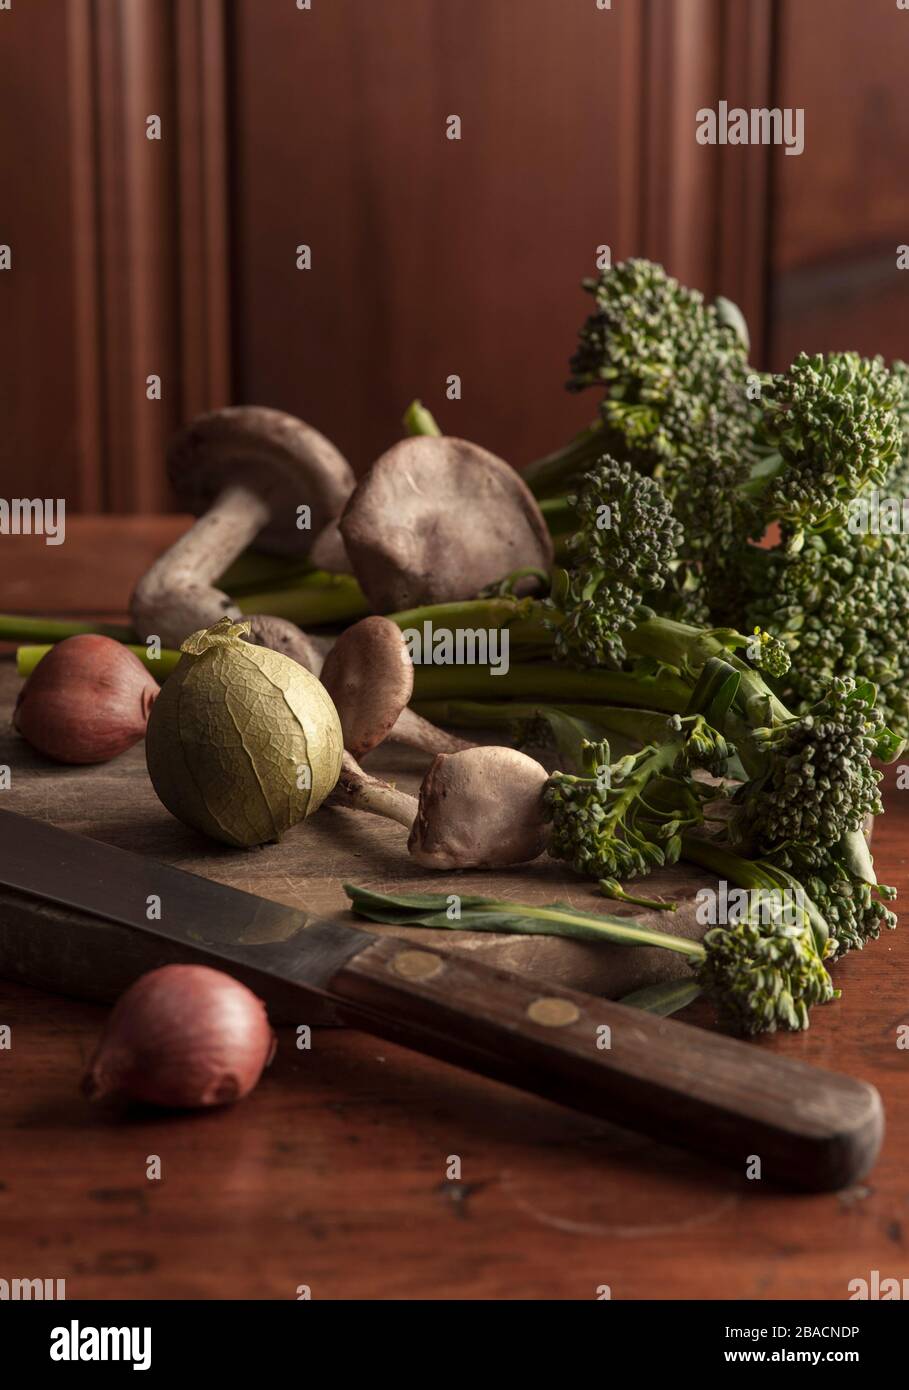 Still life of mushrooms, shallots, broccolini and tomatillo onwood cutting board. Stock Photo